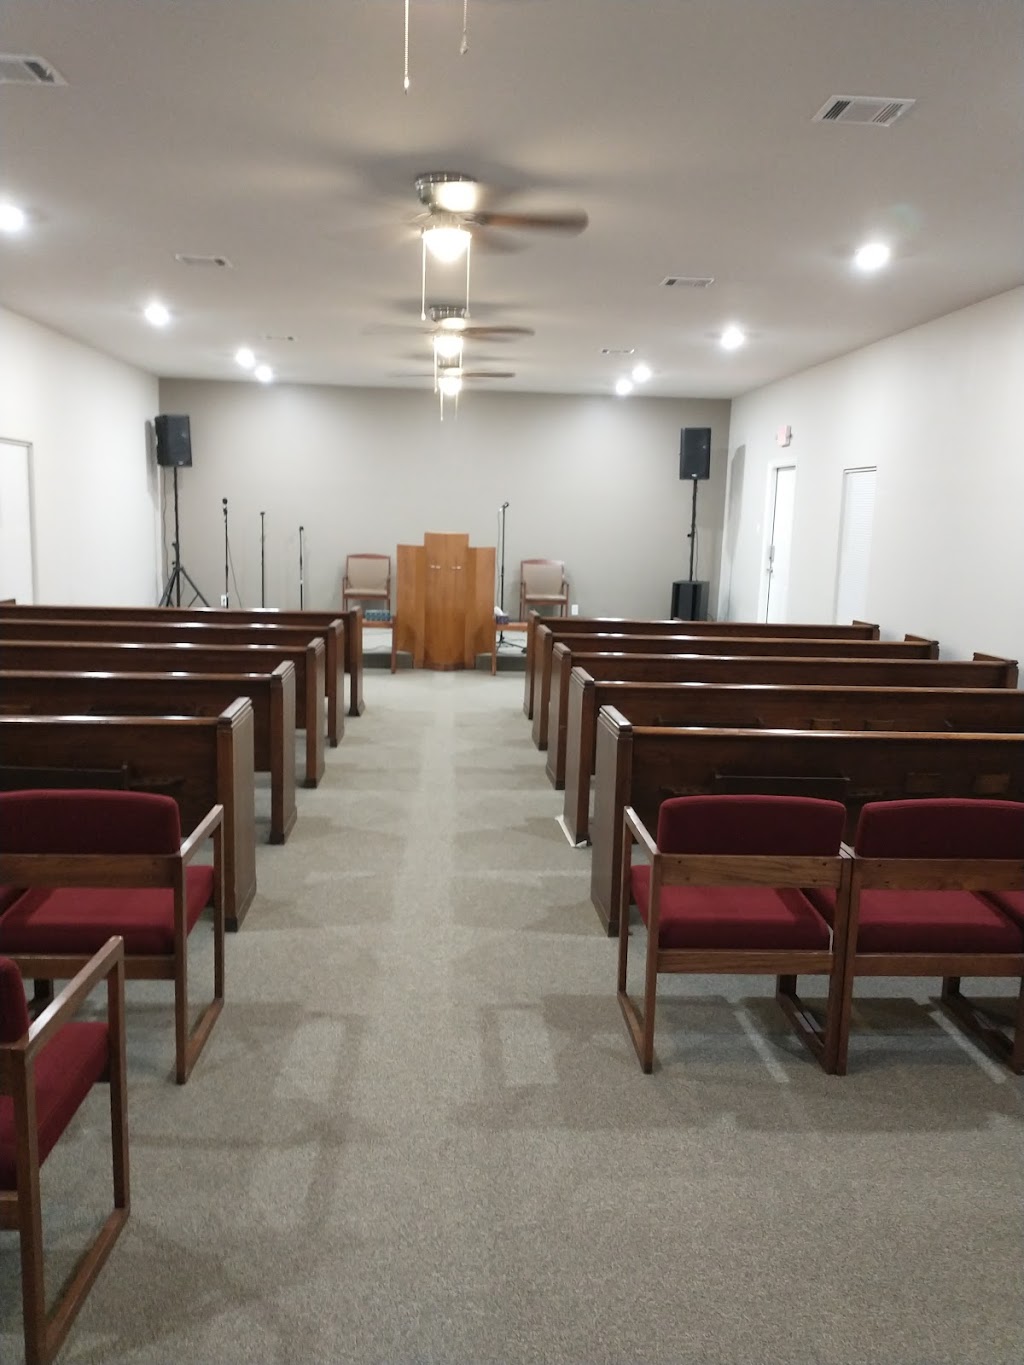 Church of the Living God | 1208 W Clayton St, Dayton, TX 77535, USA | Phone: (936) 253-2871